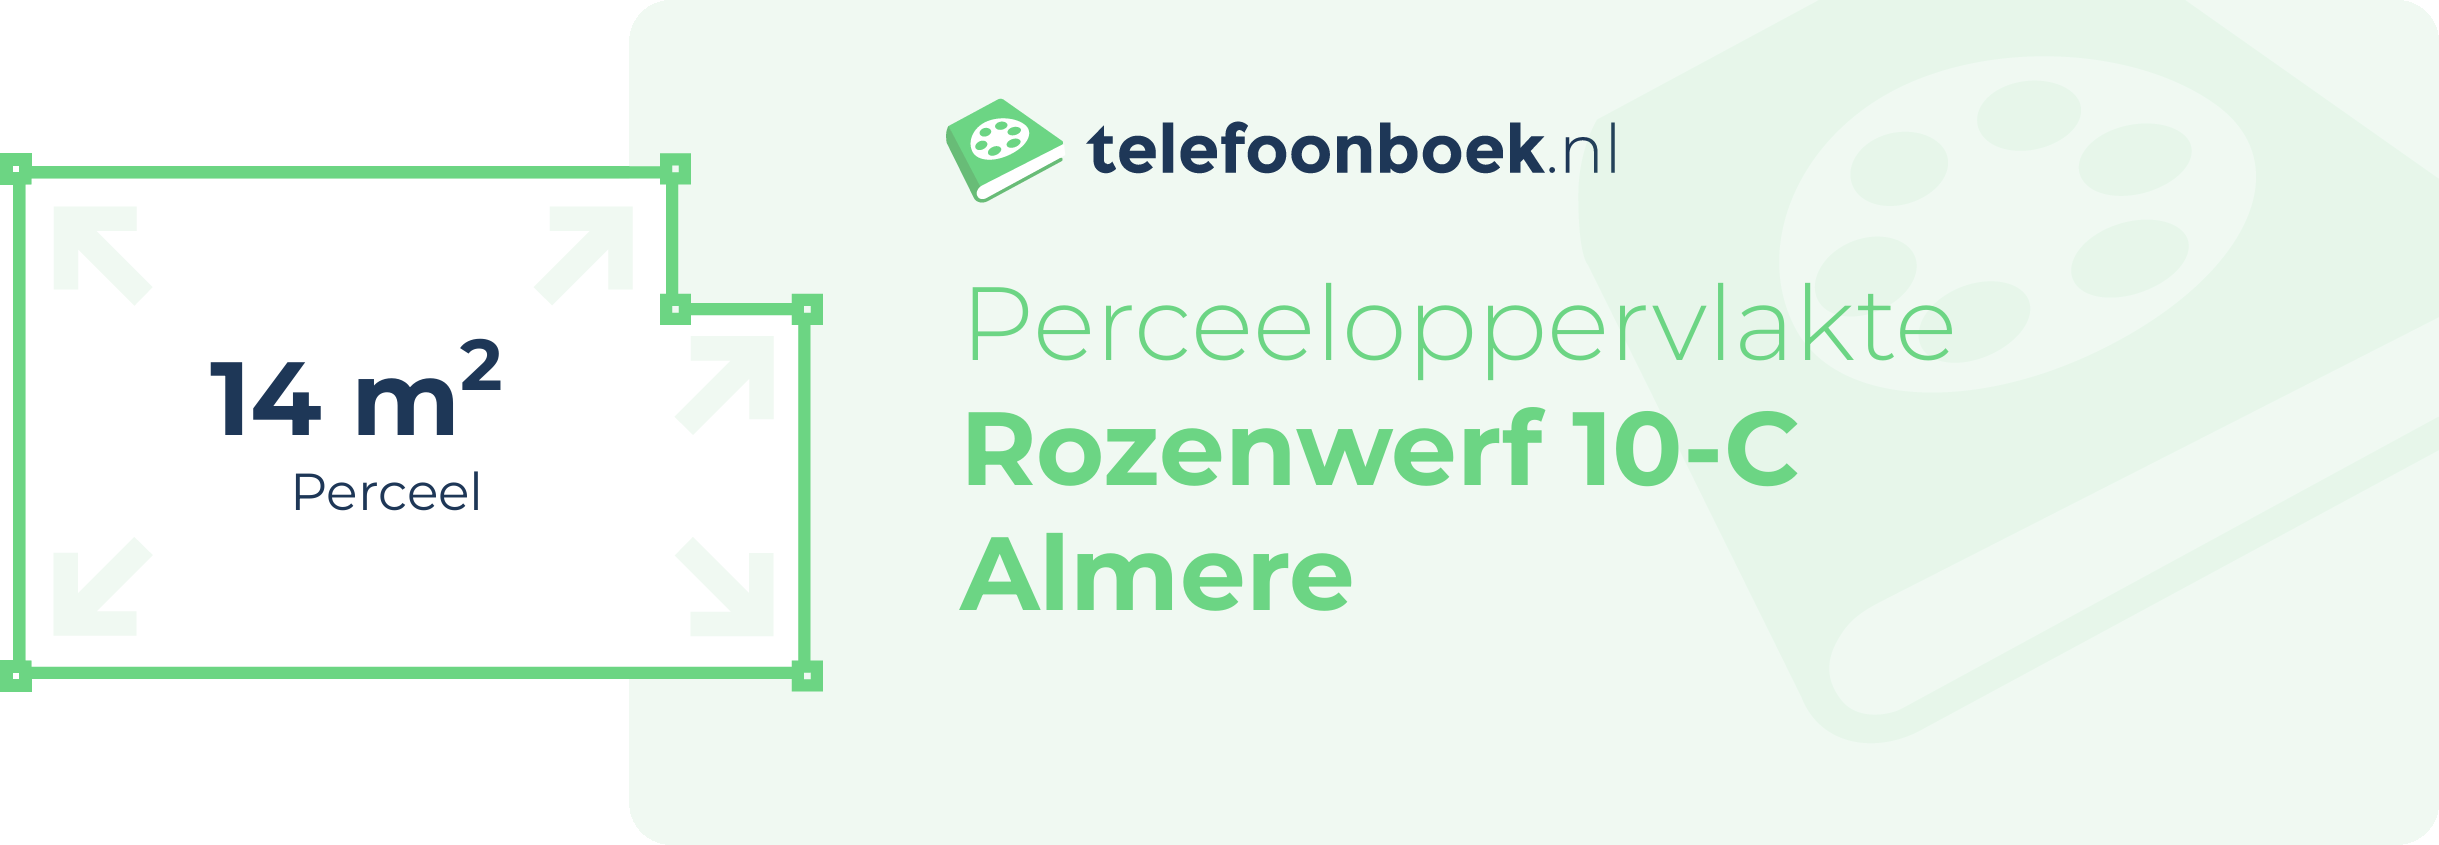 Perceeloppervlakte Rozenwerf 10-C Almere